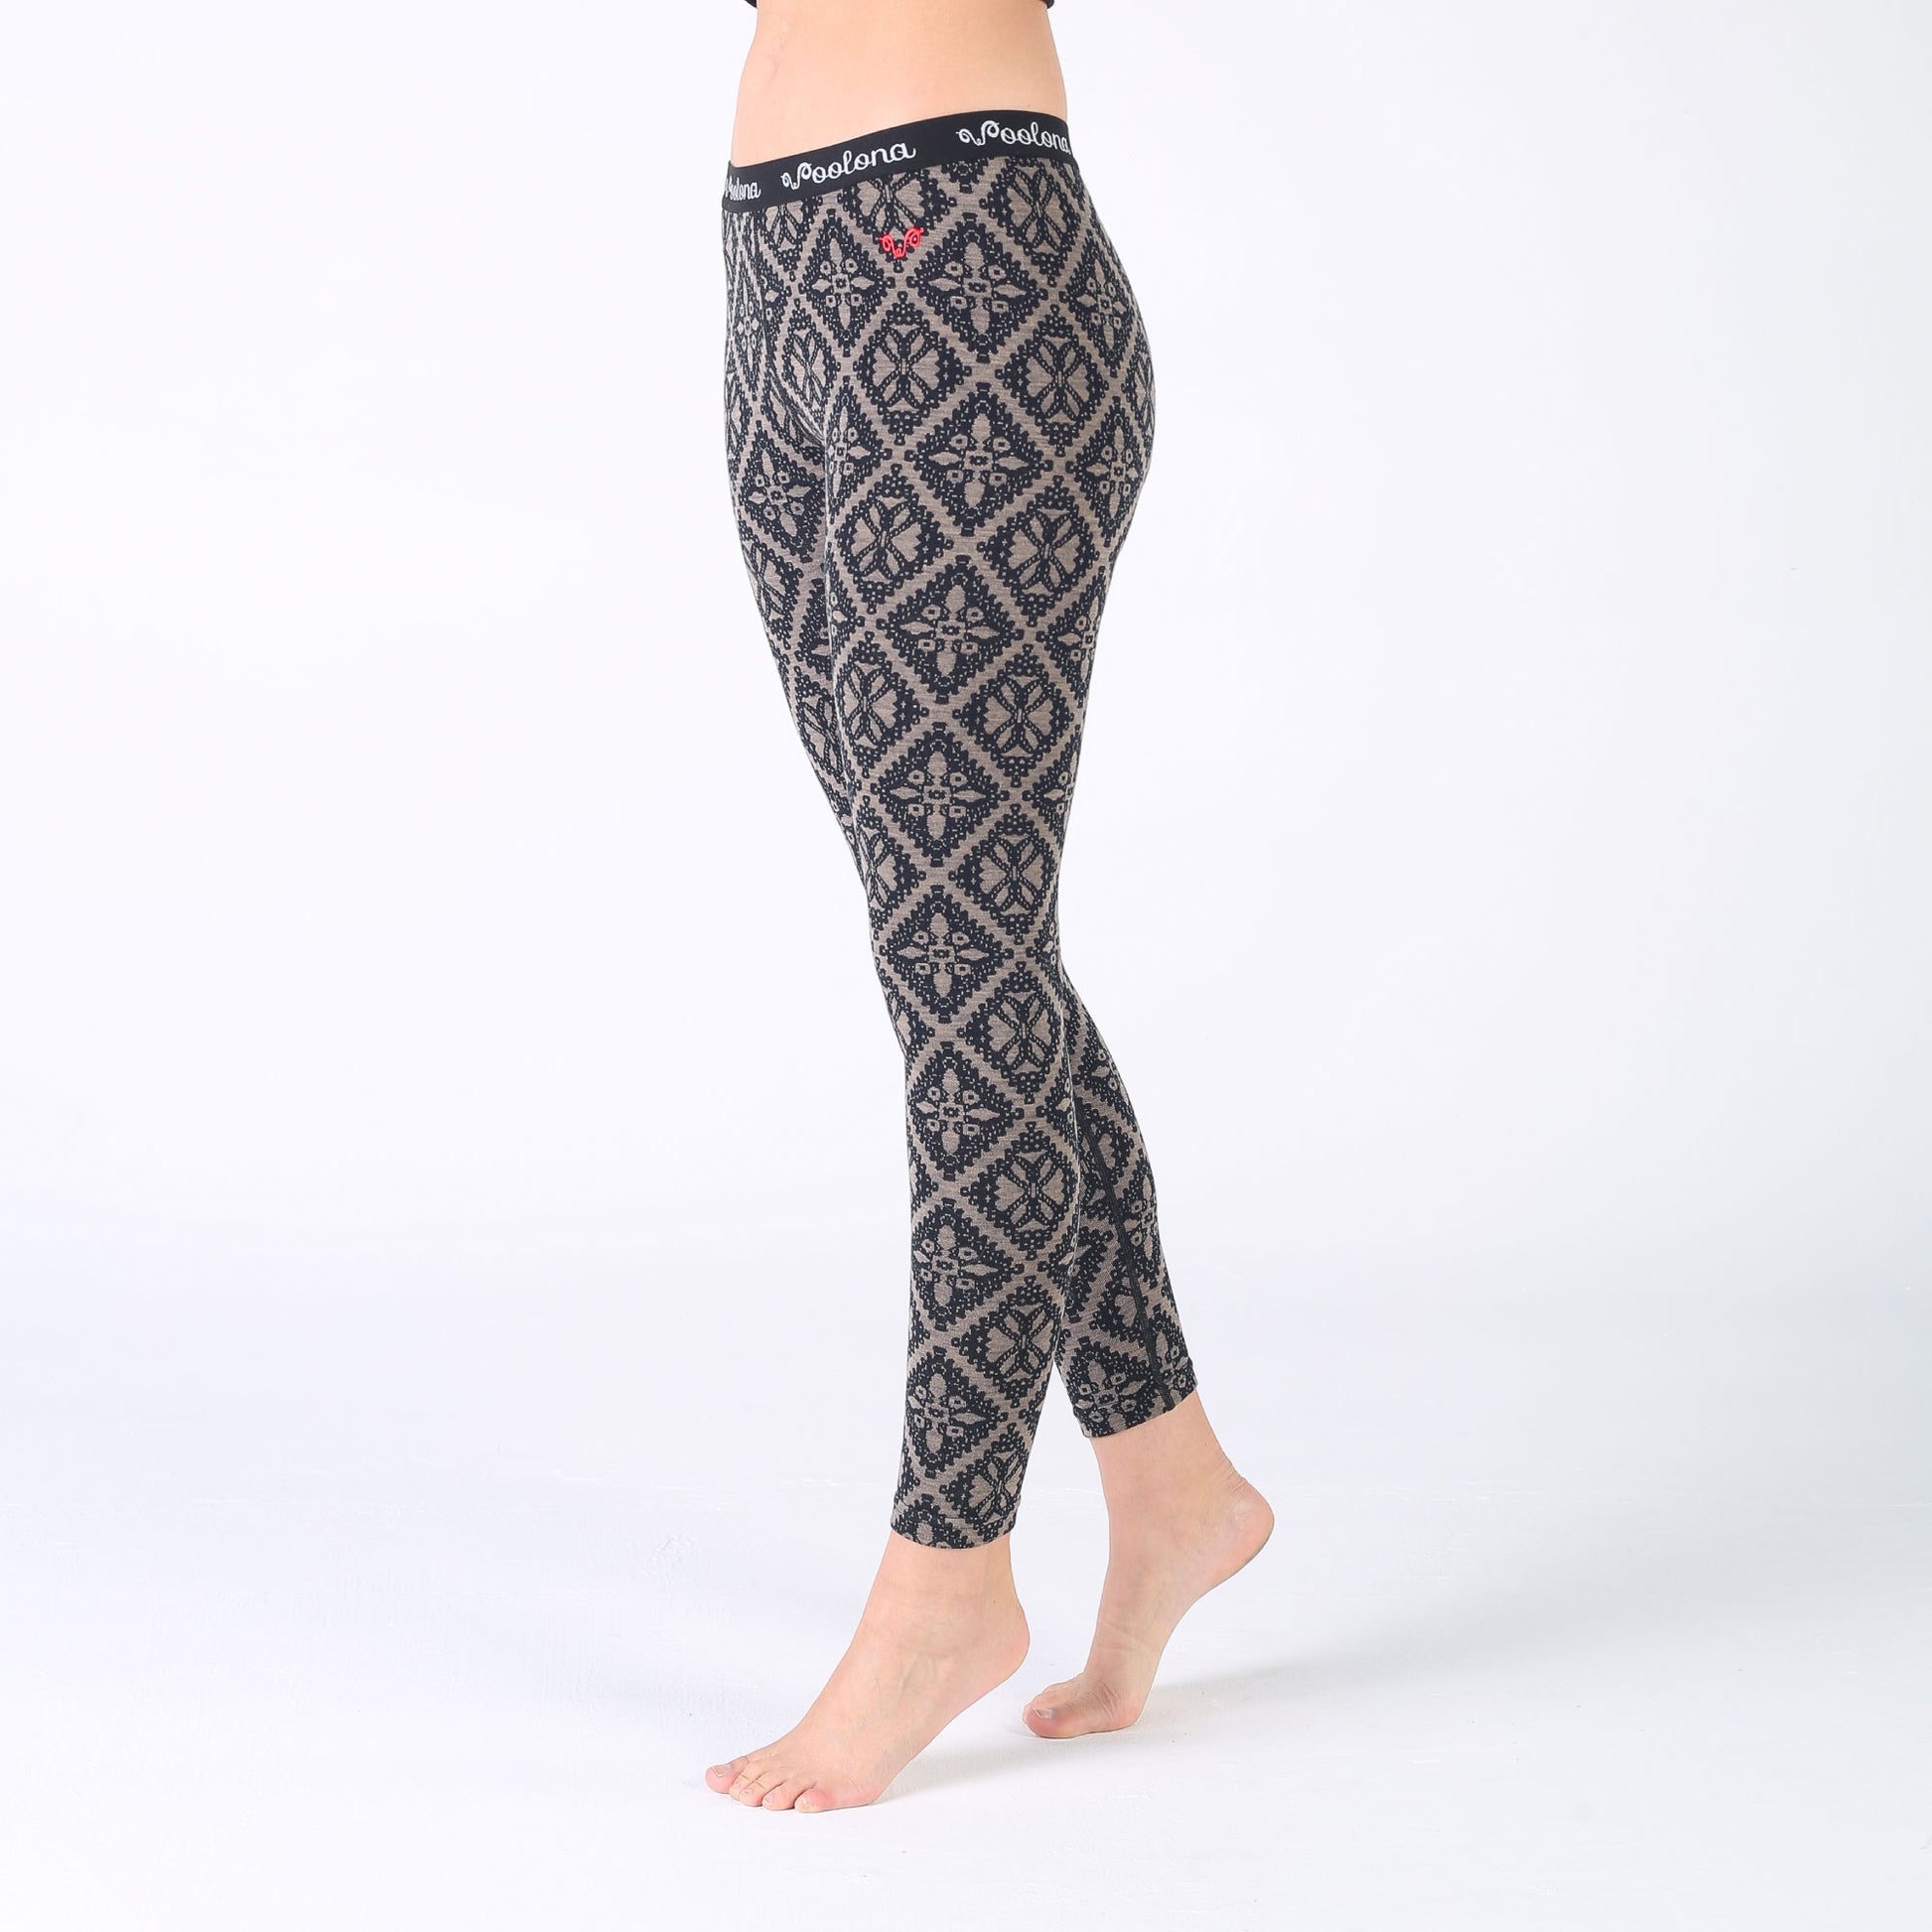 100 Merino Wool Legging and Top&Bottom for Women Thermal Yoga